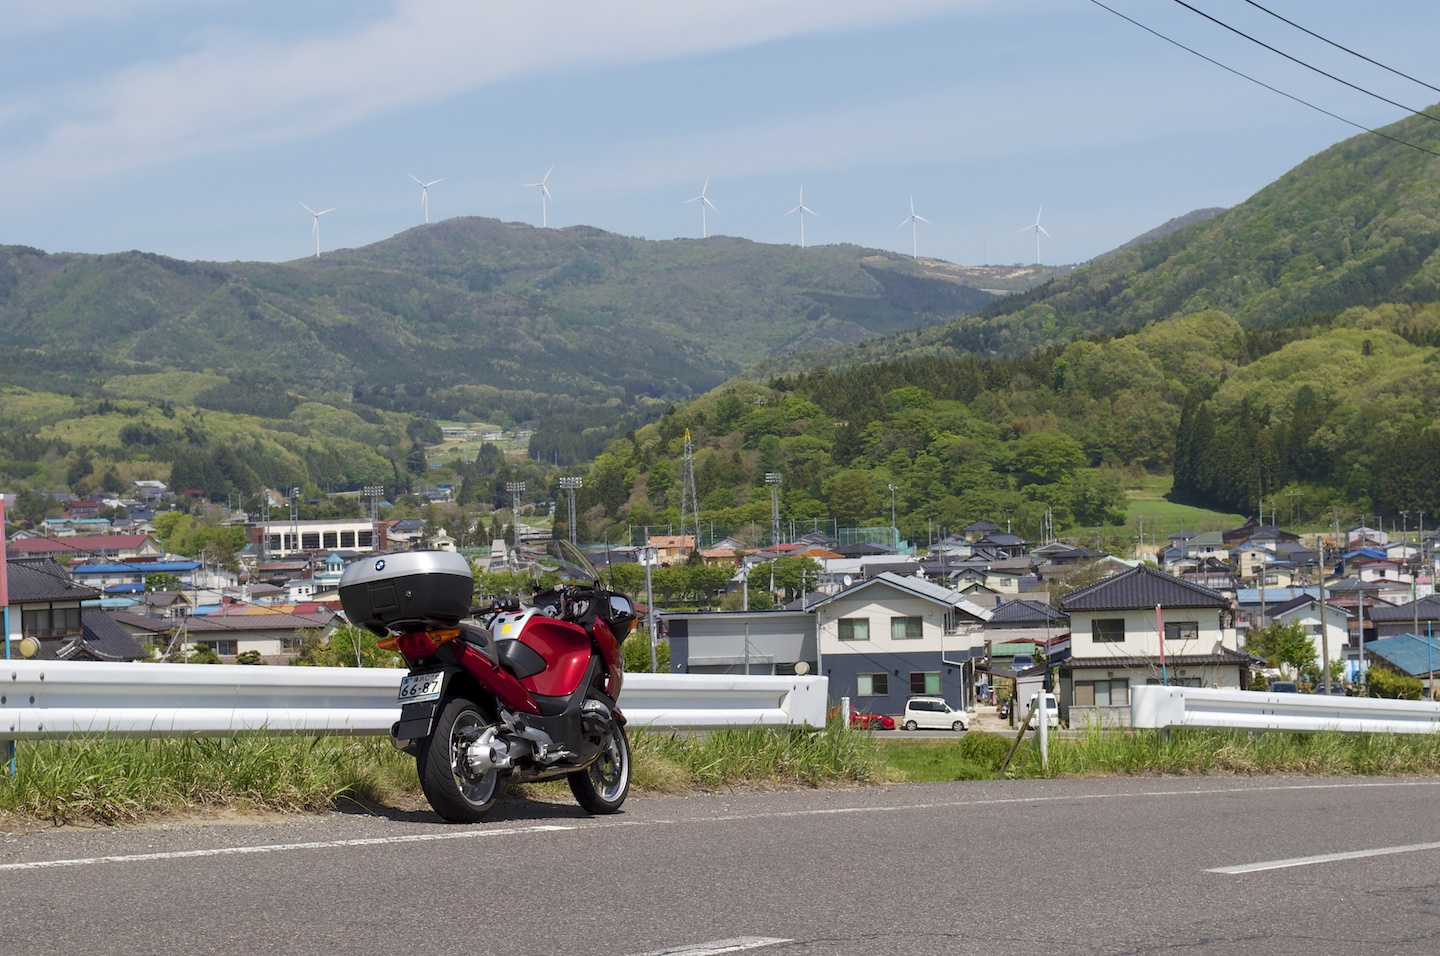 Fukushima pref. road 36